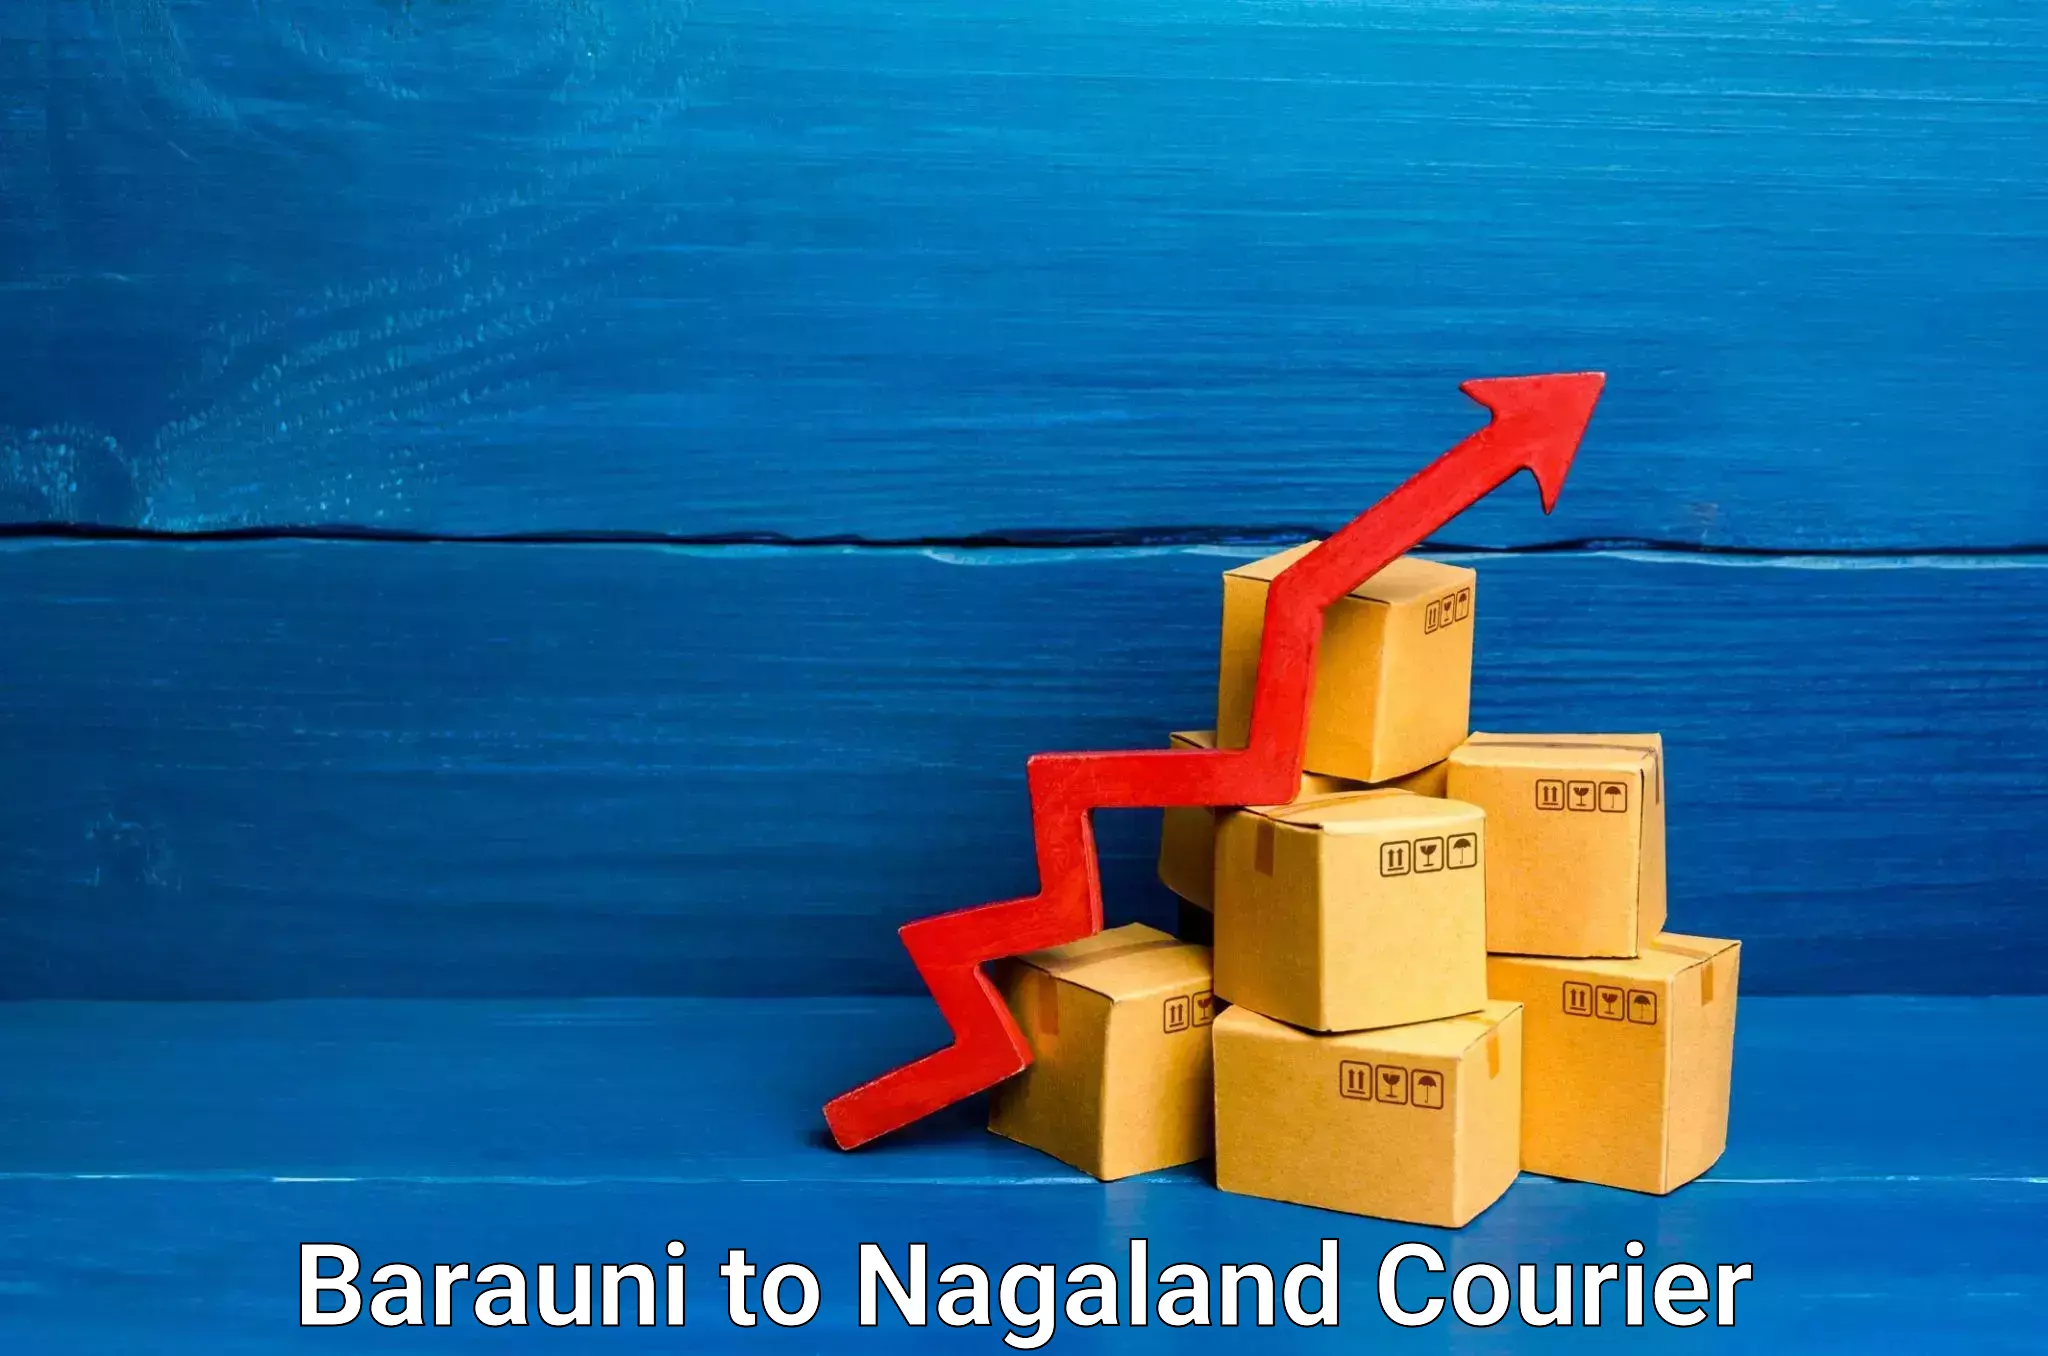 Professional moving company Barauni to Nagaland